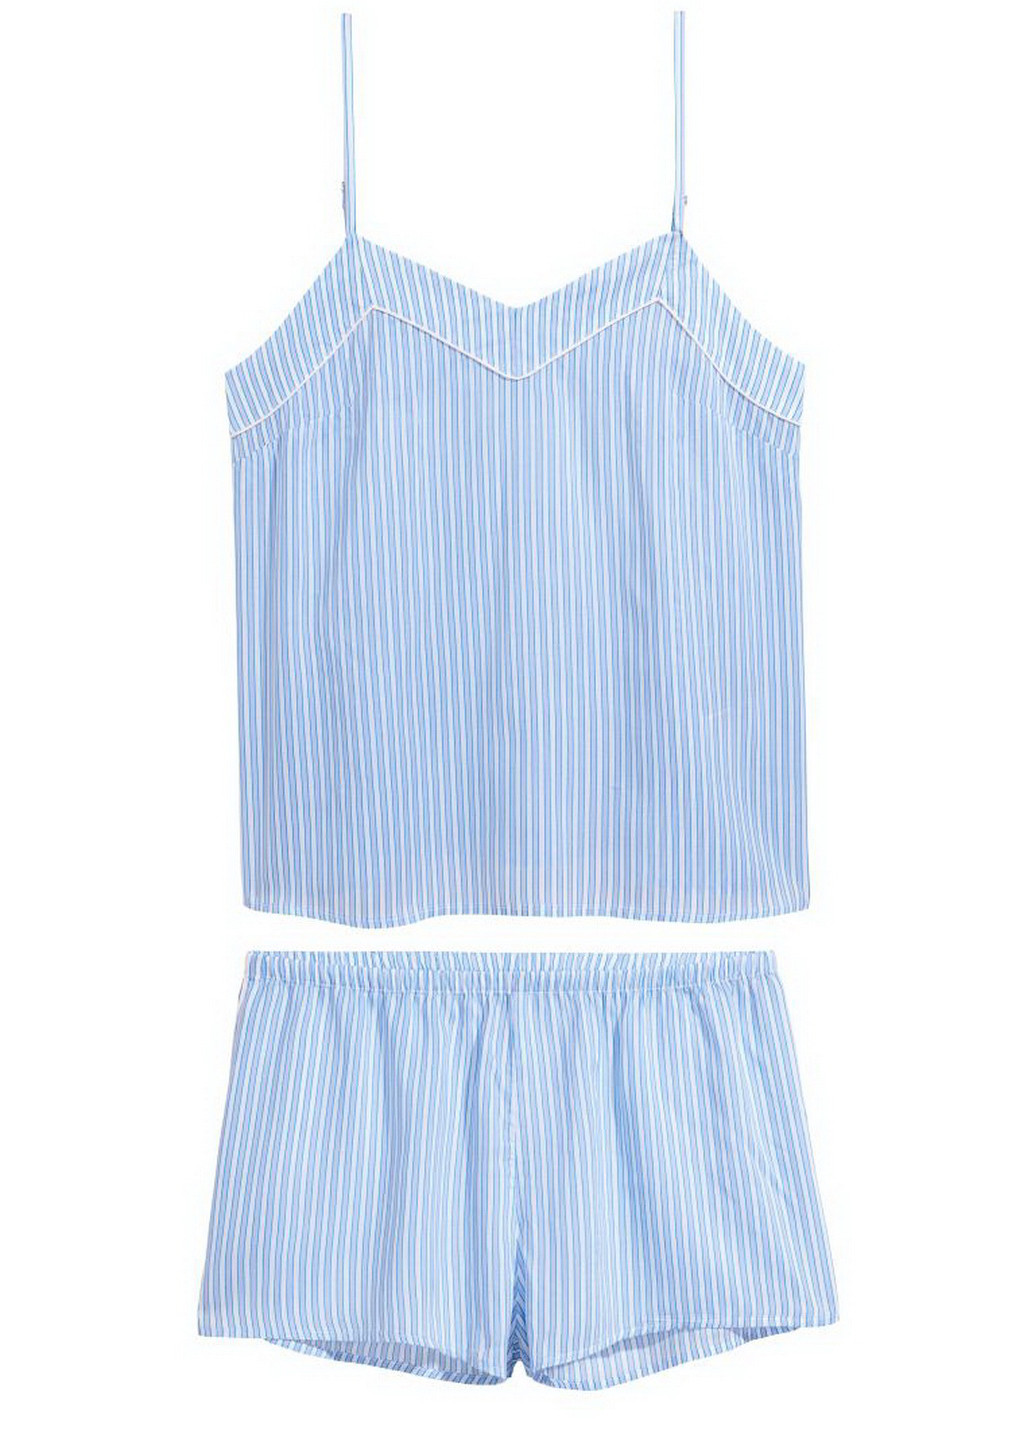 Голубая всесезон пижама (майка, шорты) майка + шорты H&M